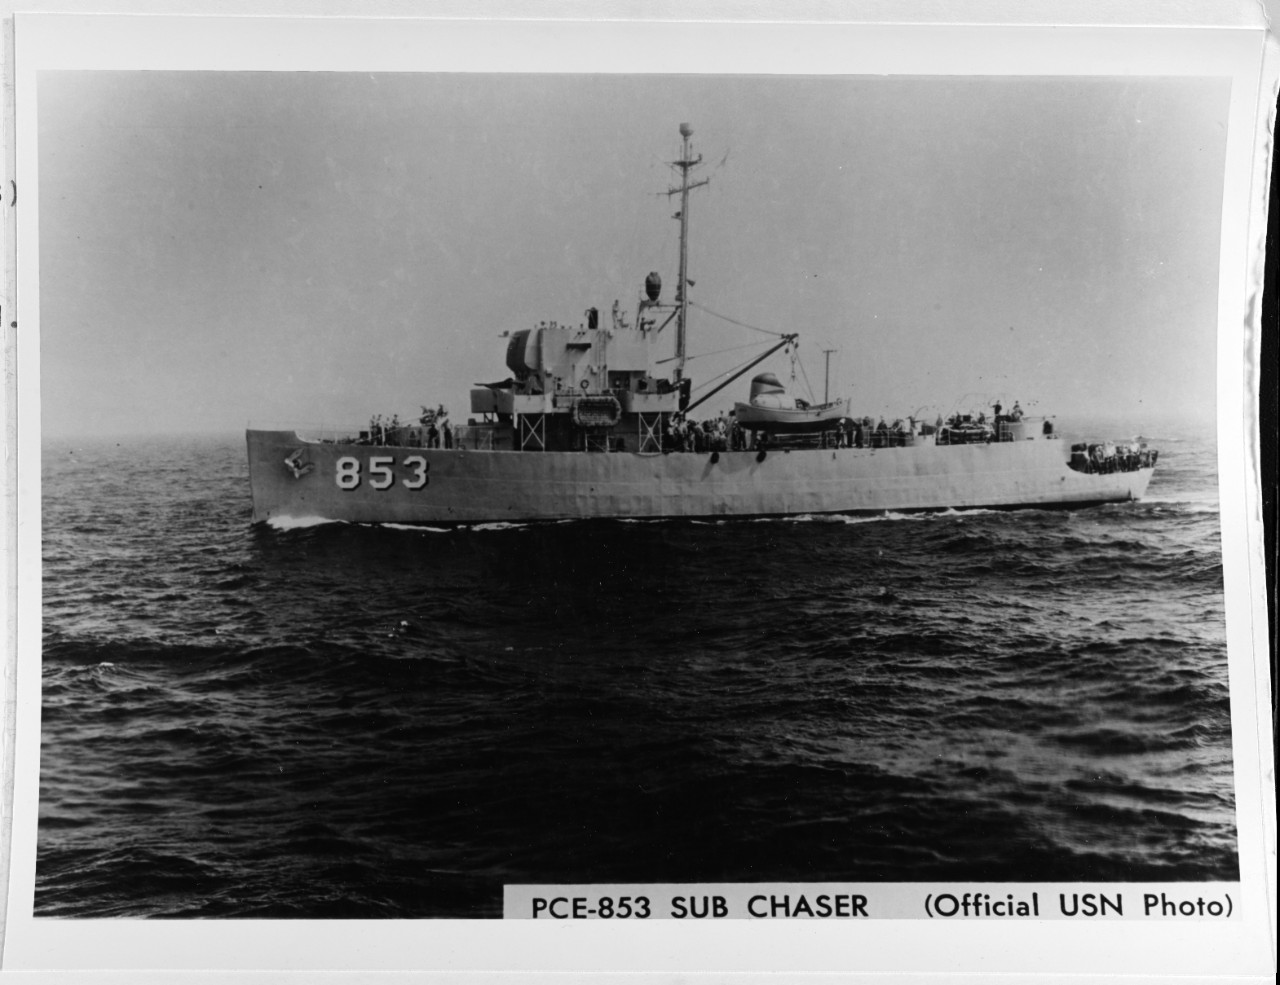 USS AMHERST (PCER-853)